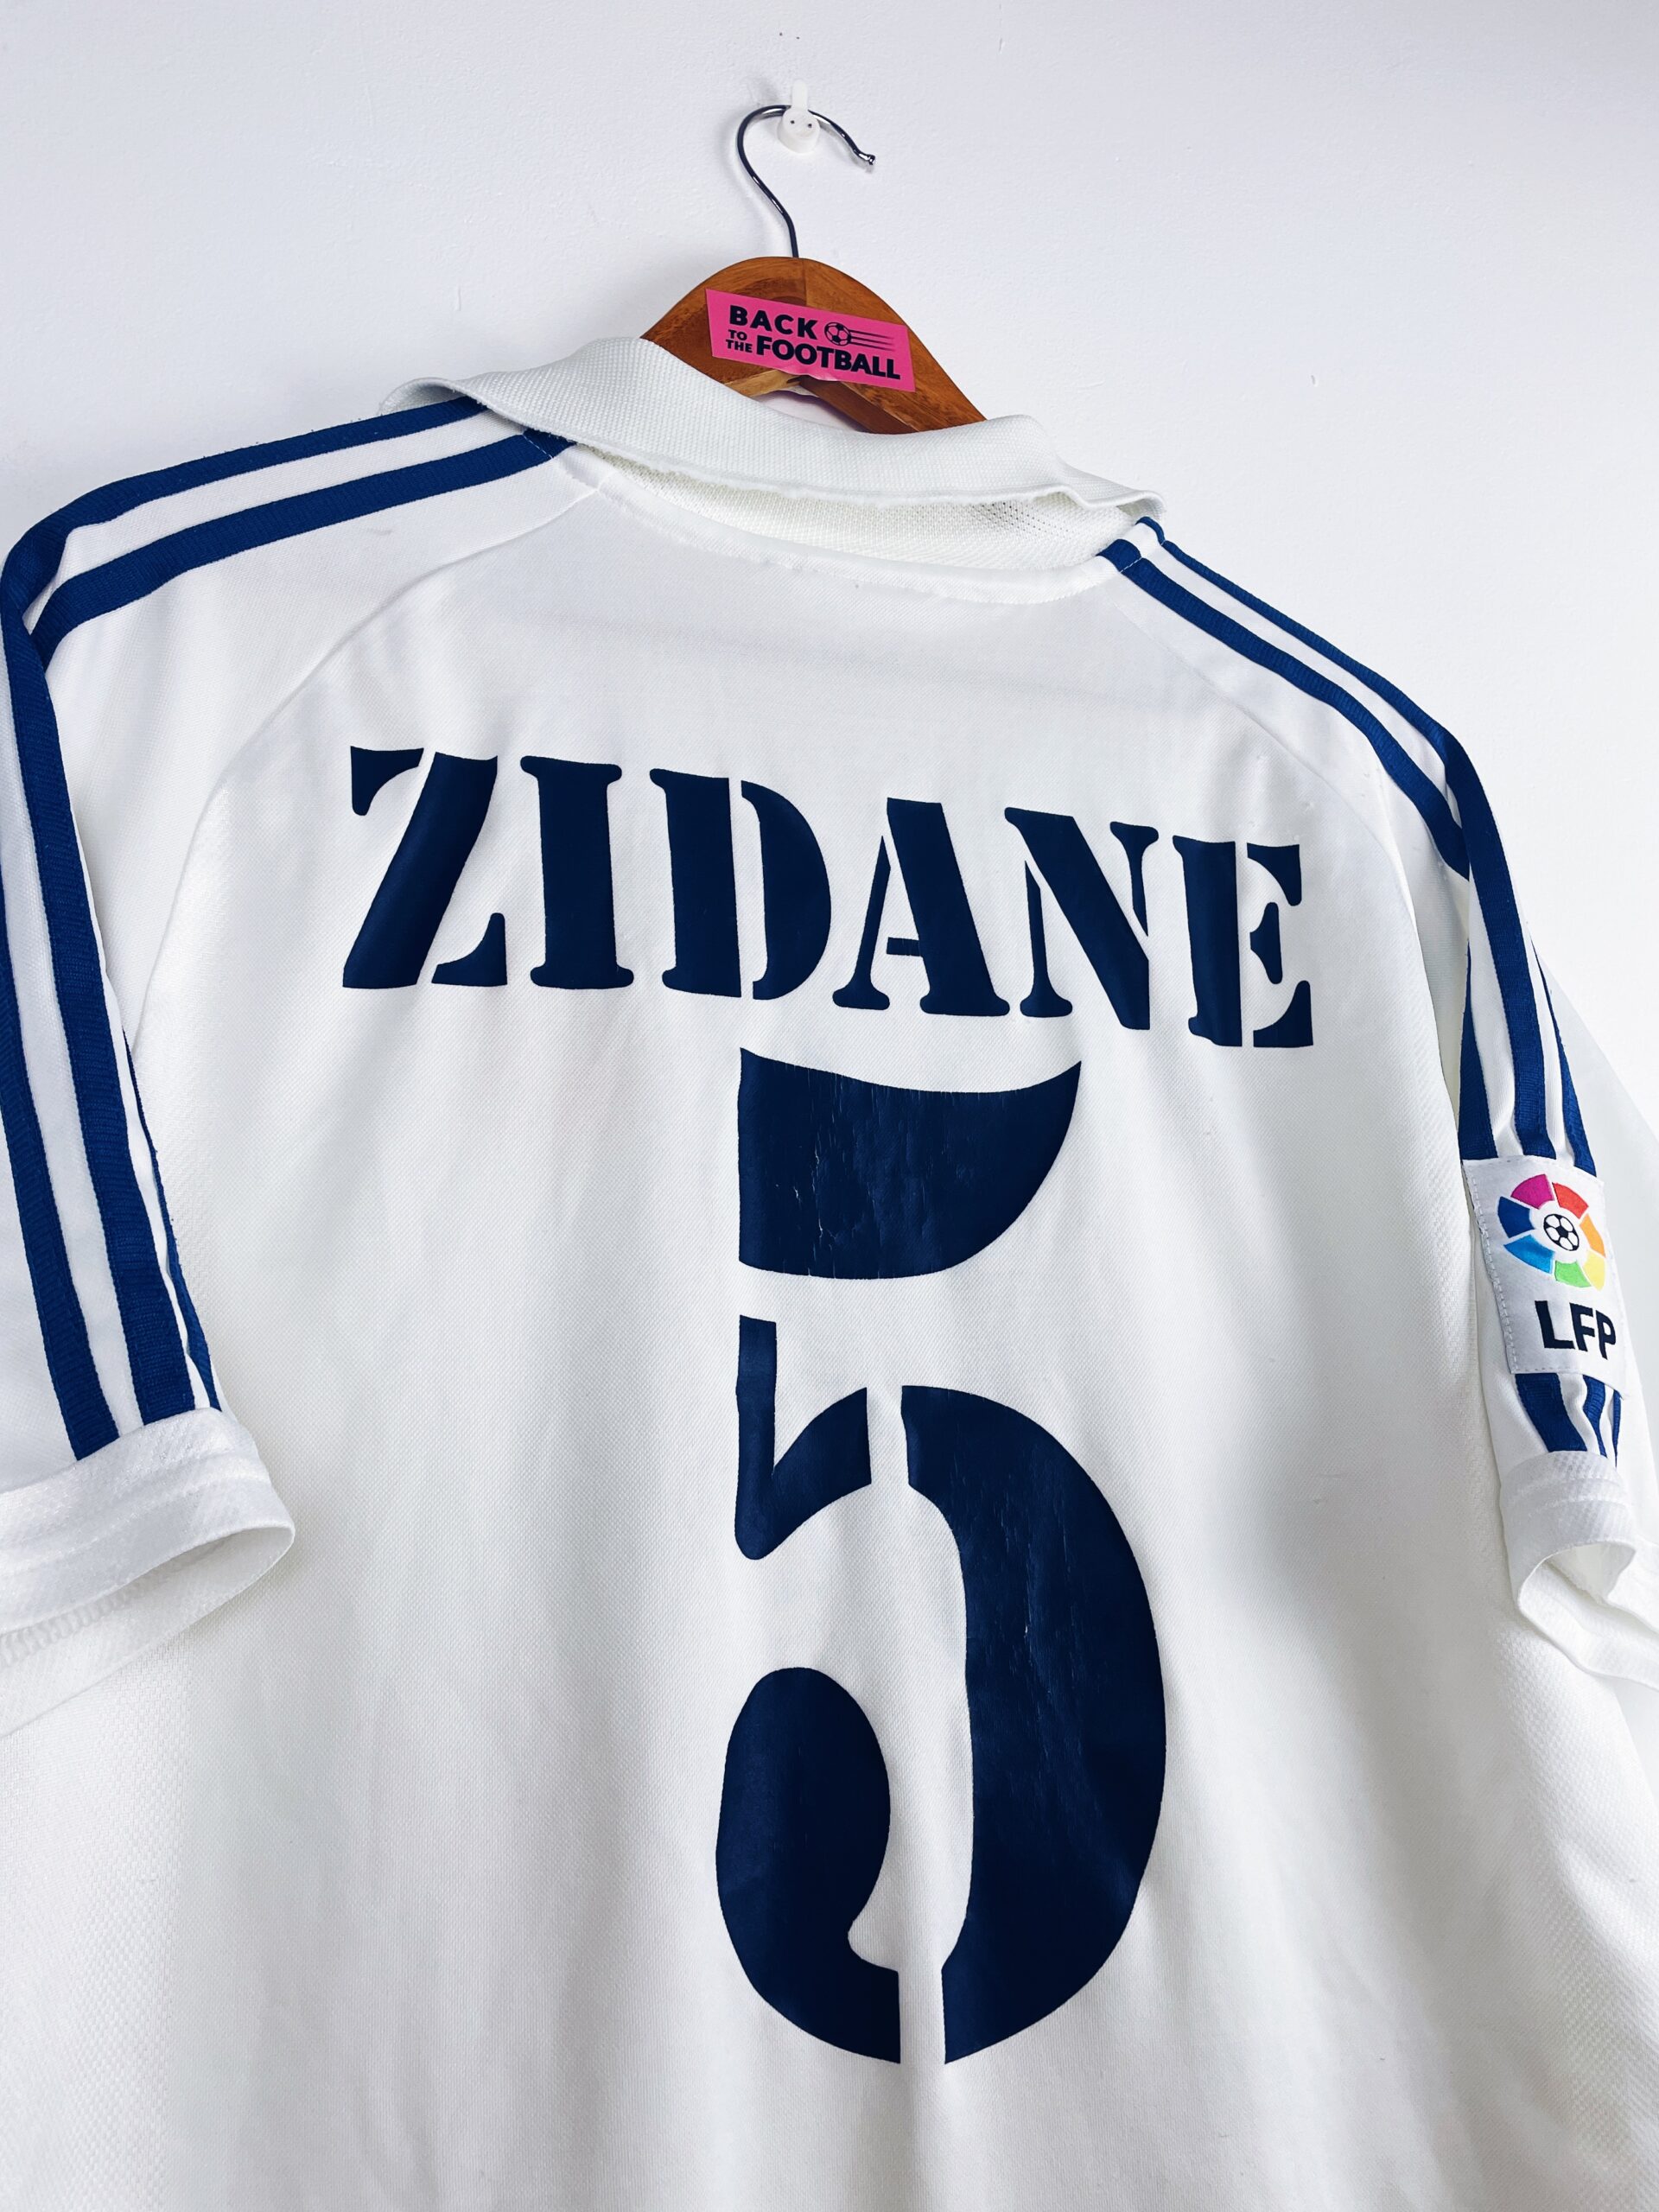 maillot zidane real madrid 2001